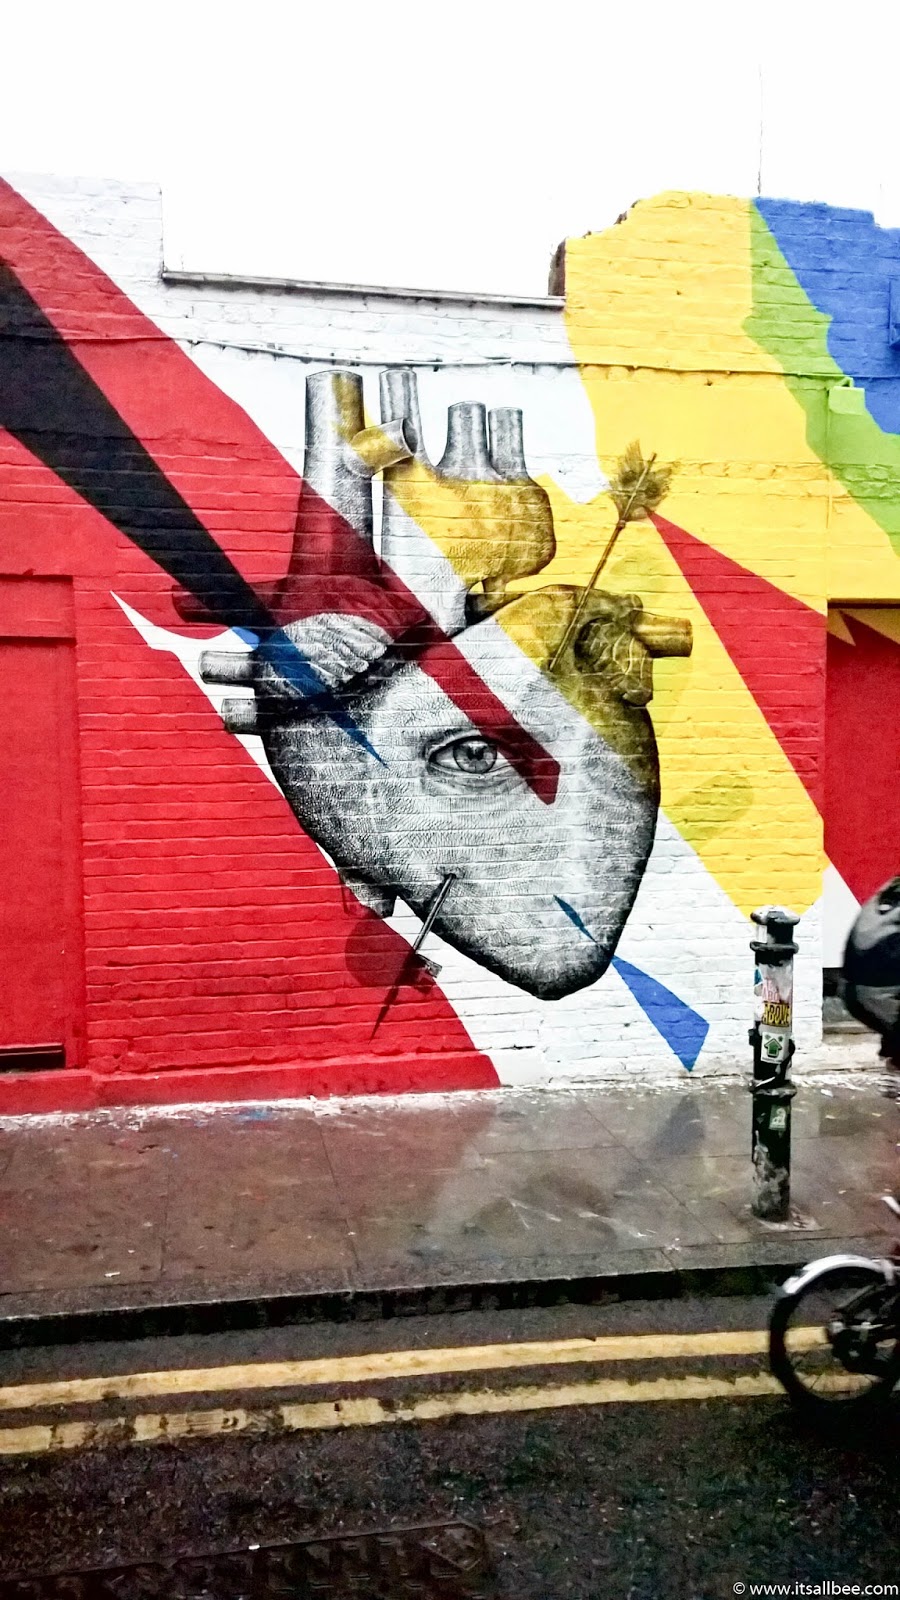 Streetart in Shoreditch